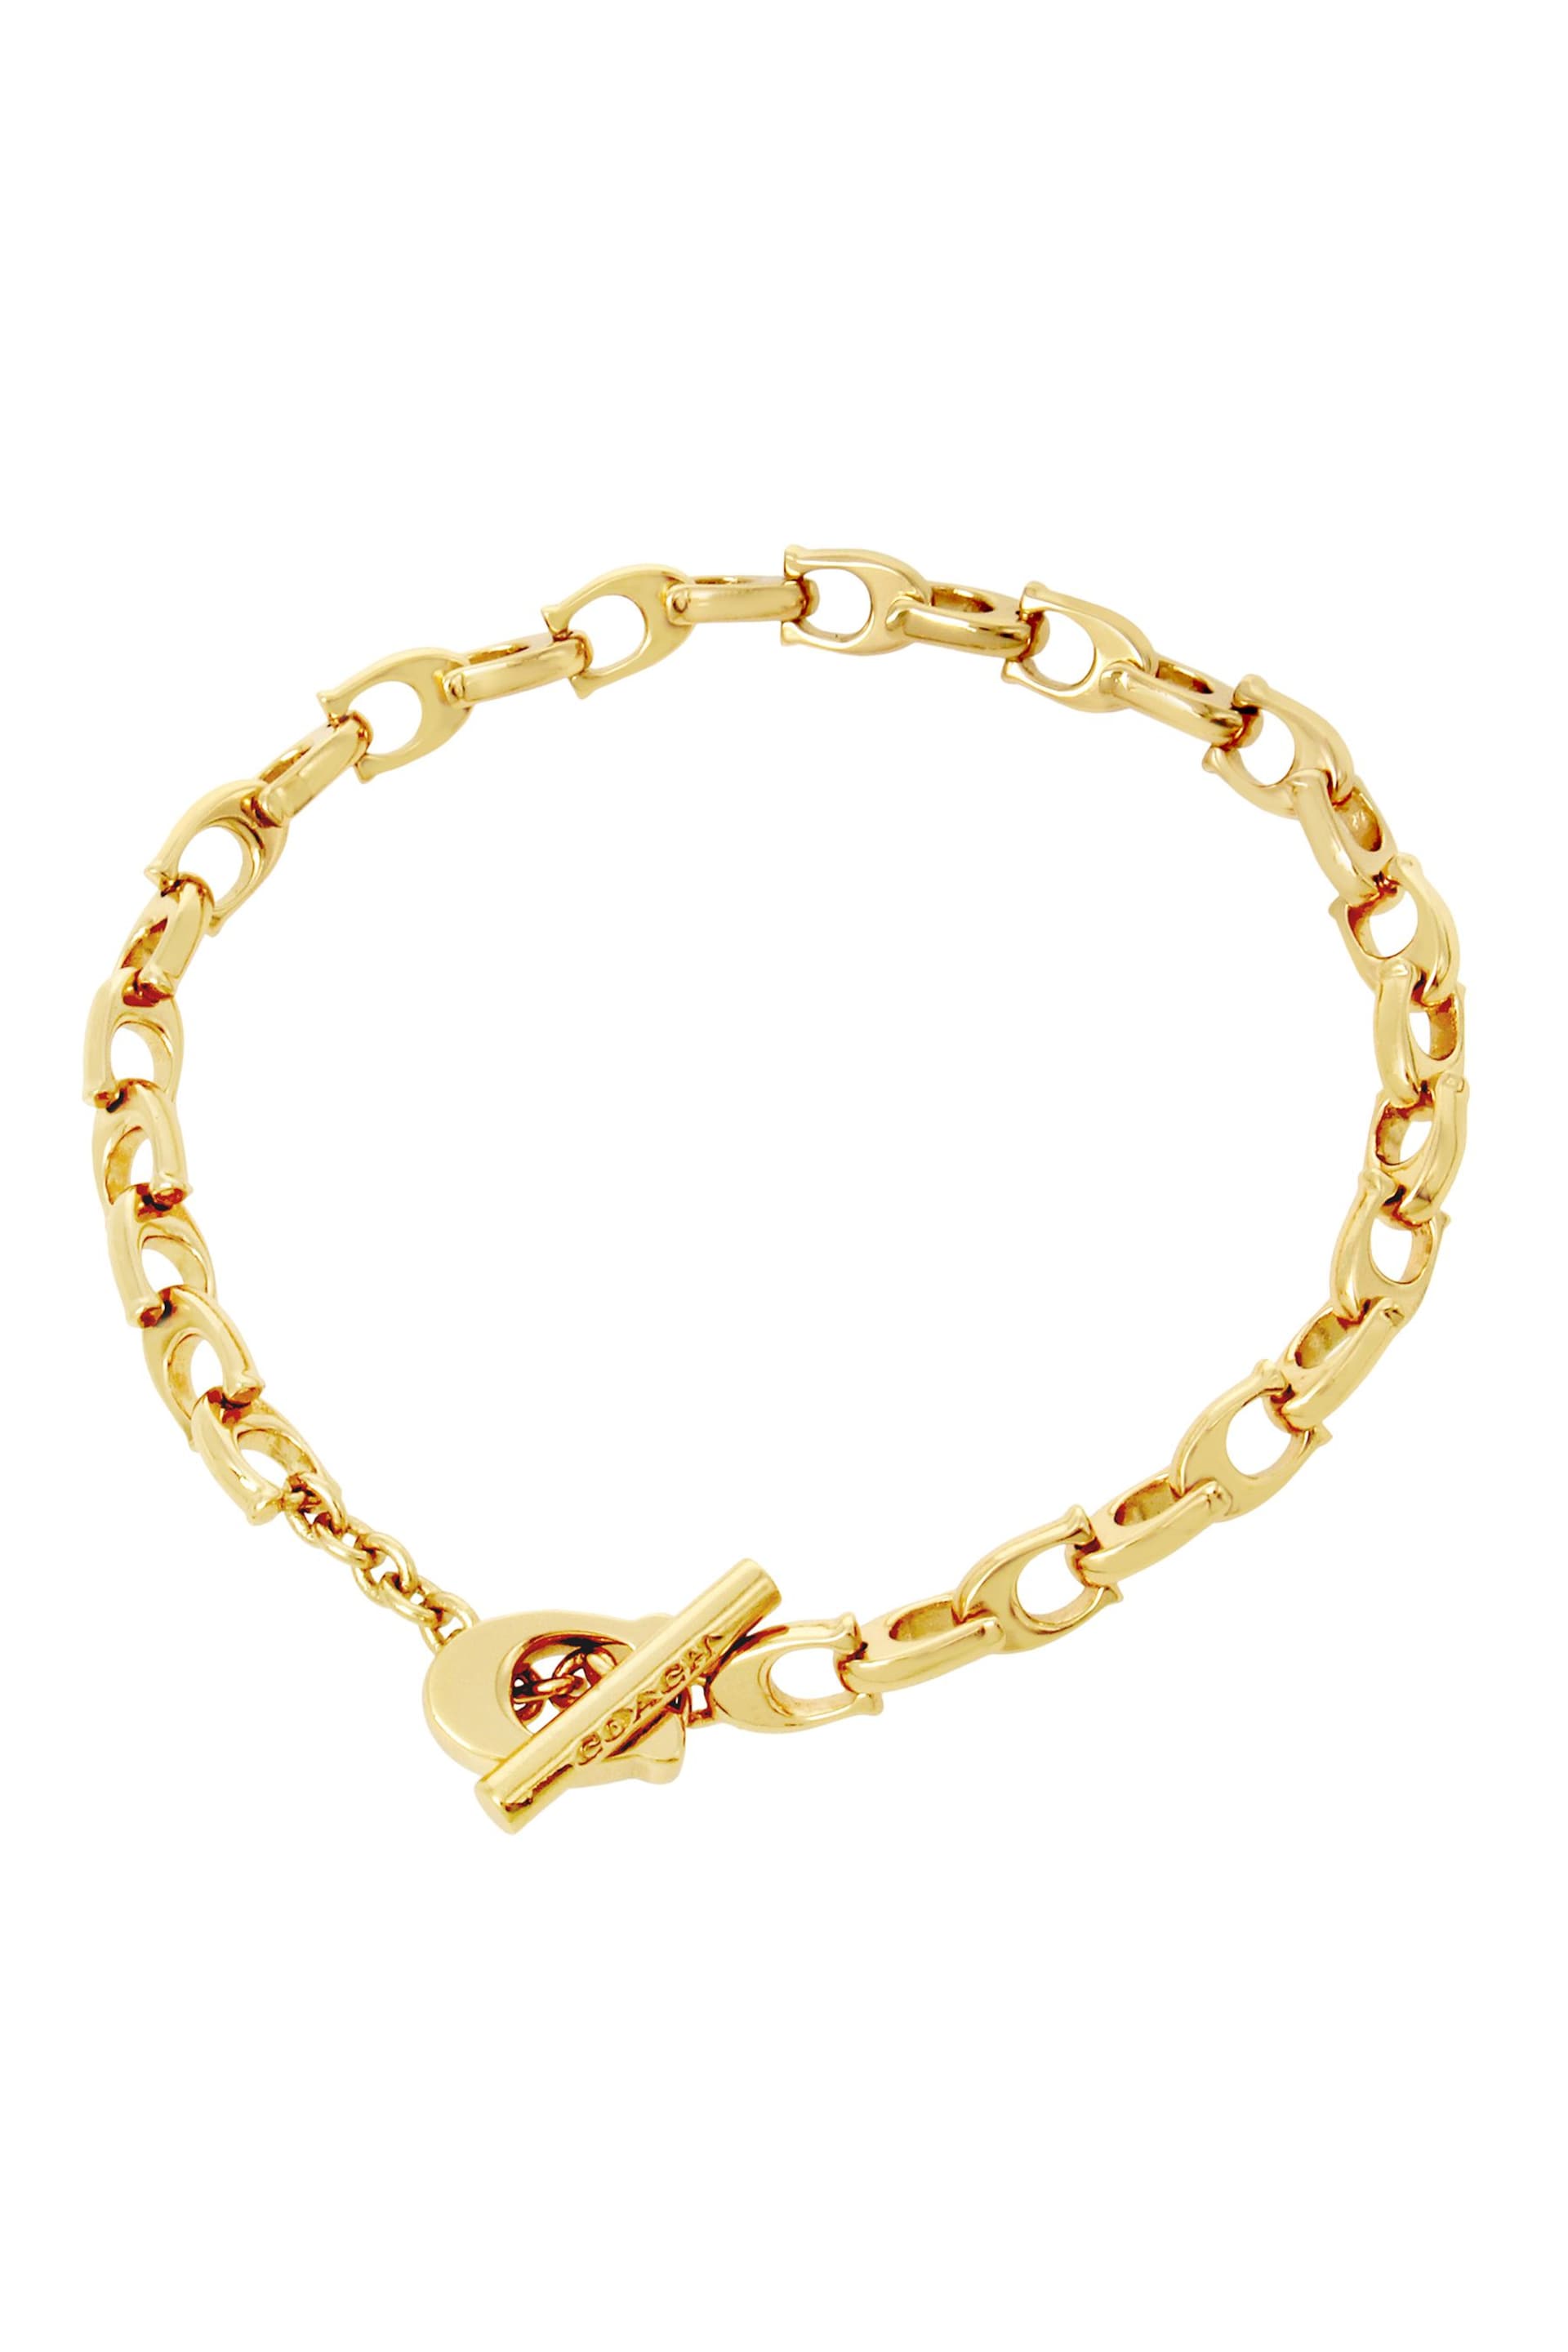 COACH Gold Tone Signature Link Bracelet - Image 1 of 3